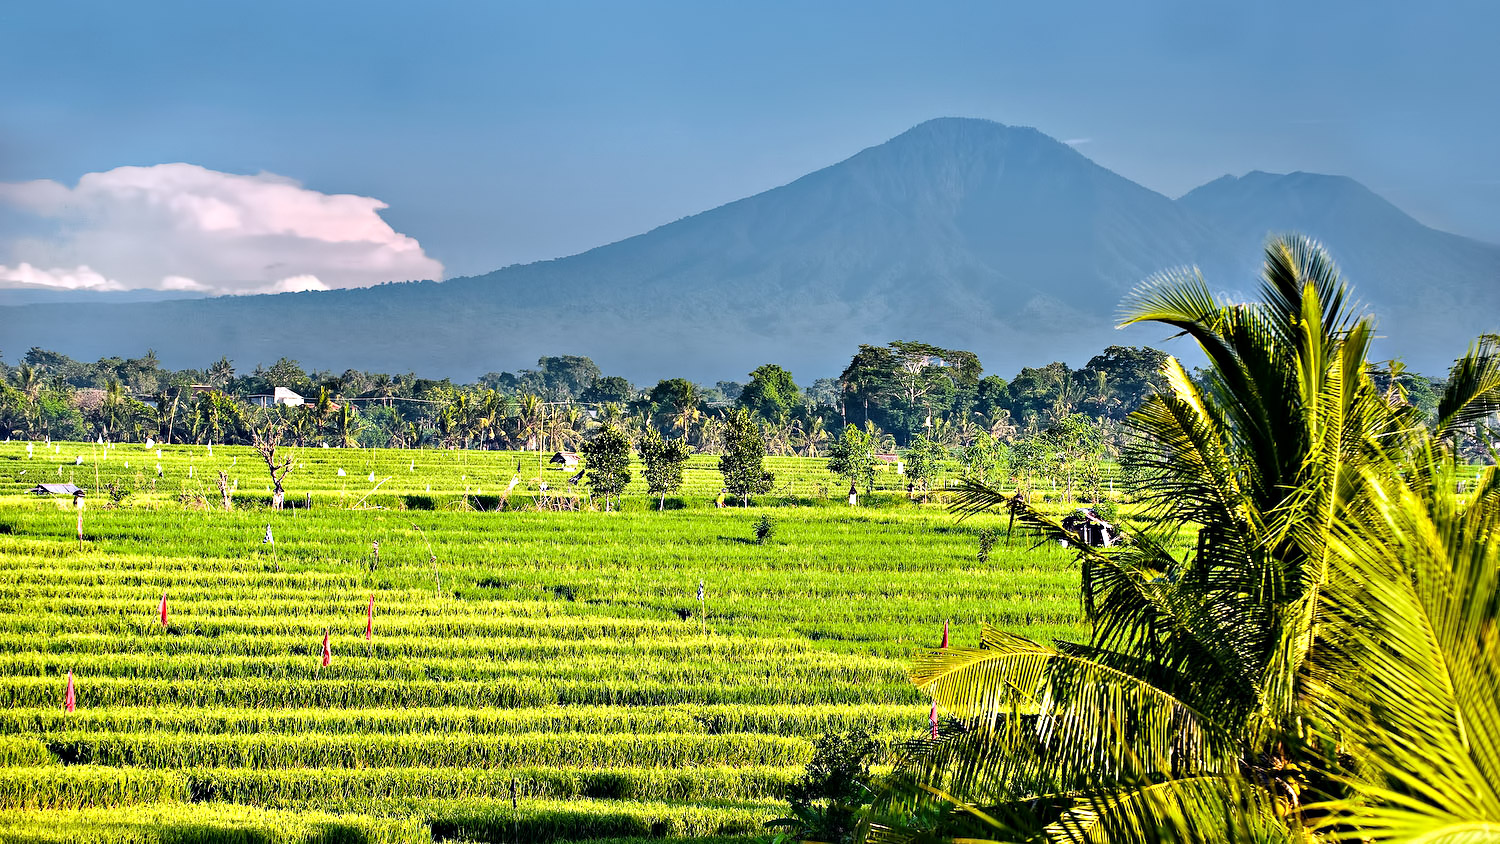 Cycle through the emerald rice fields of Canggu - Bali, Indonesia